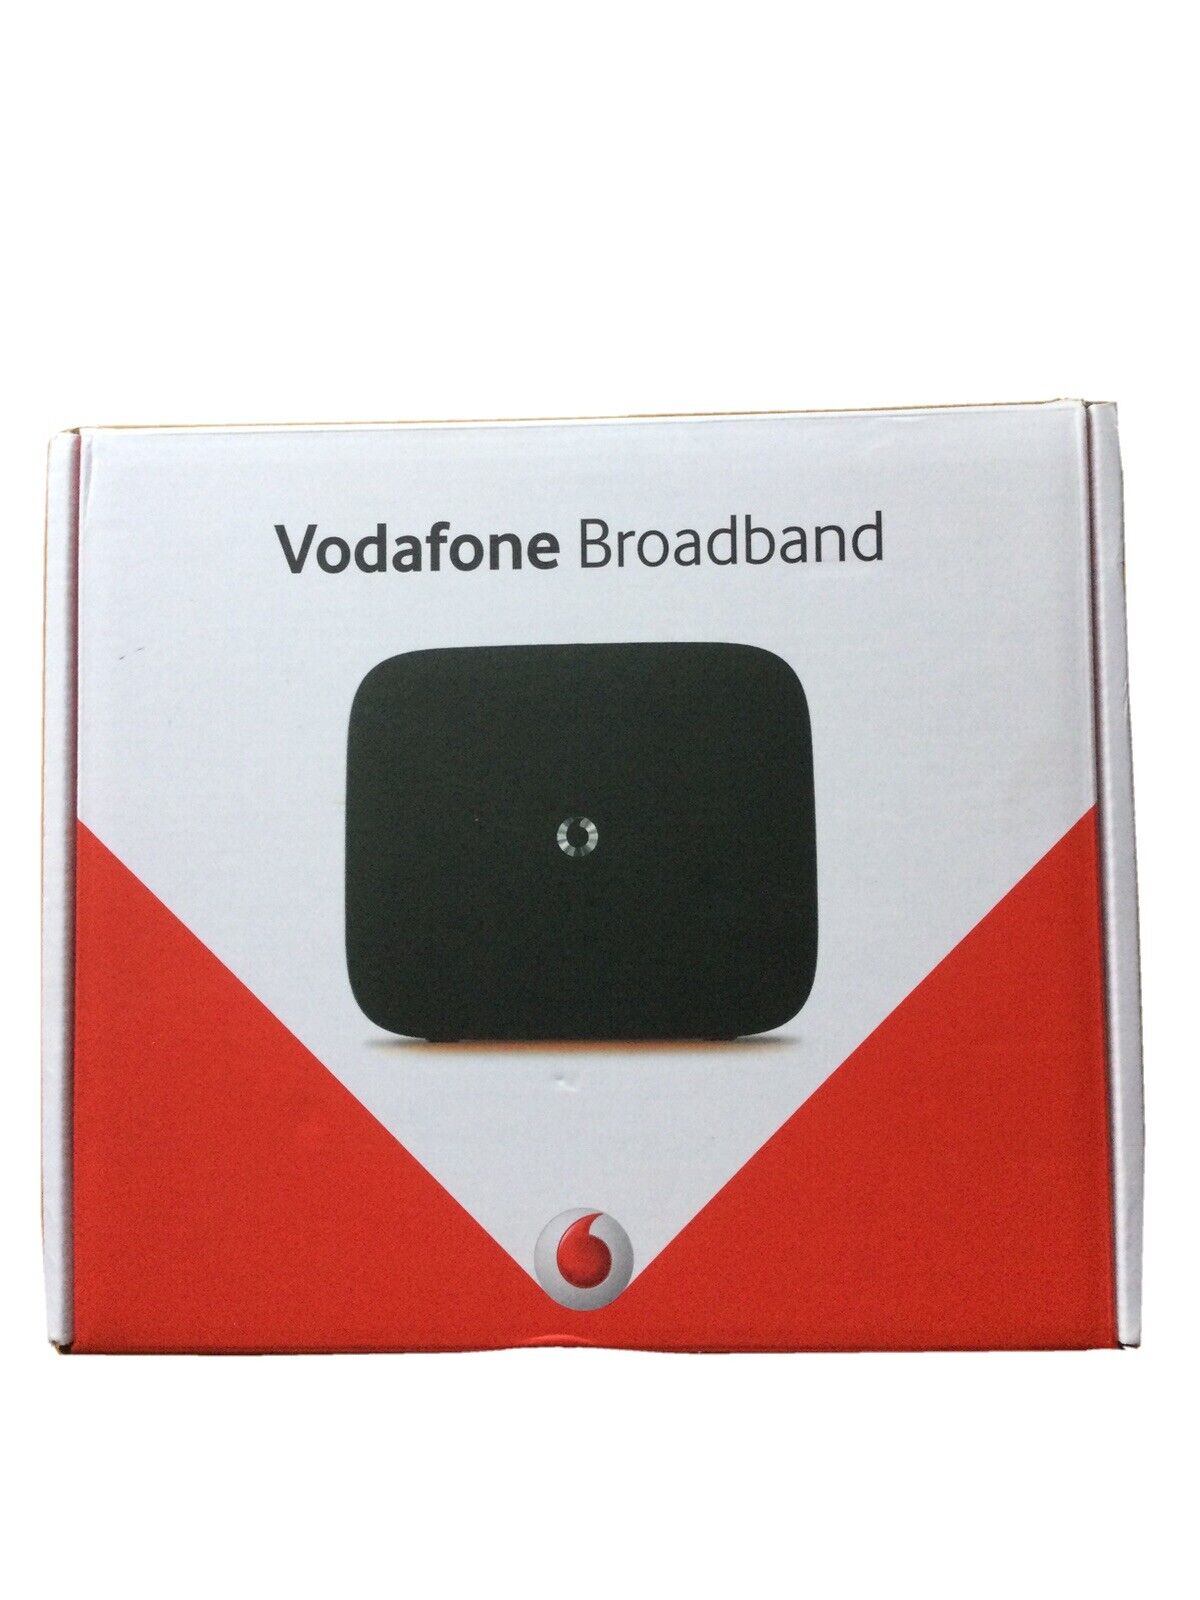 Vodafone HHG2500 Router